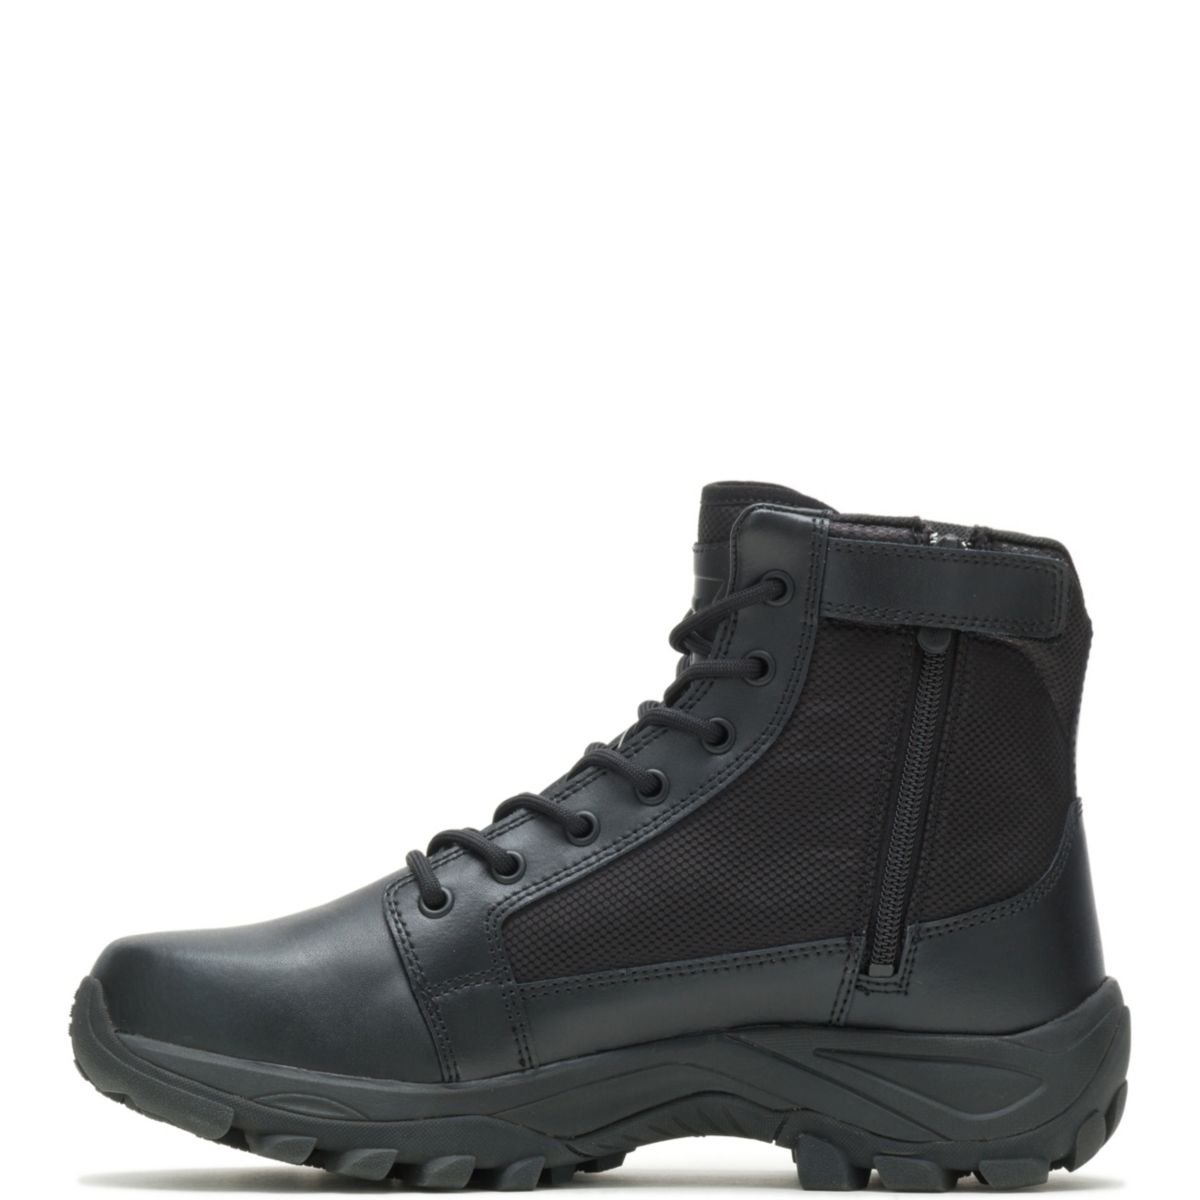 Bates Men's Fuse Mid 6-inch Side Zip Boot Black - E06506 BLACK - BLACK, 11